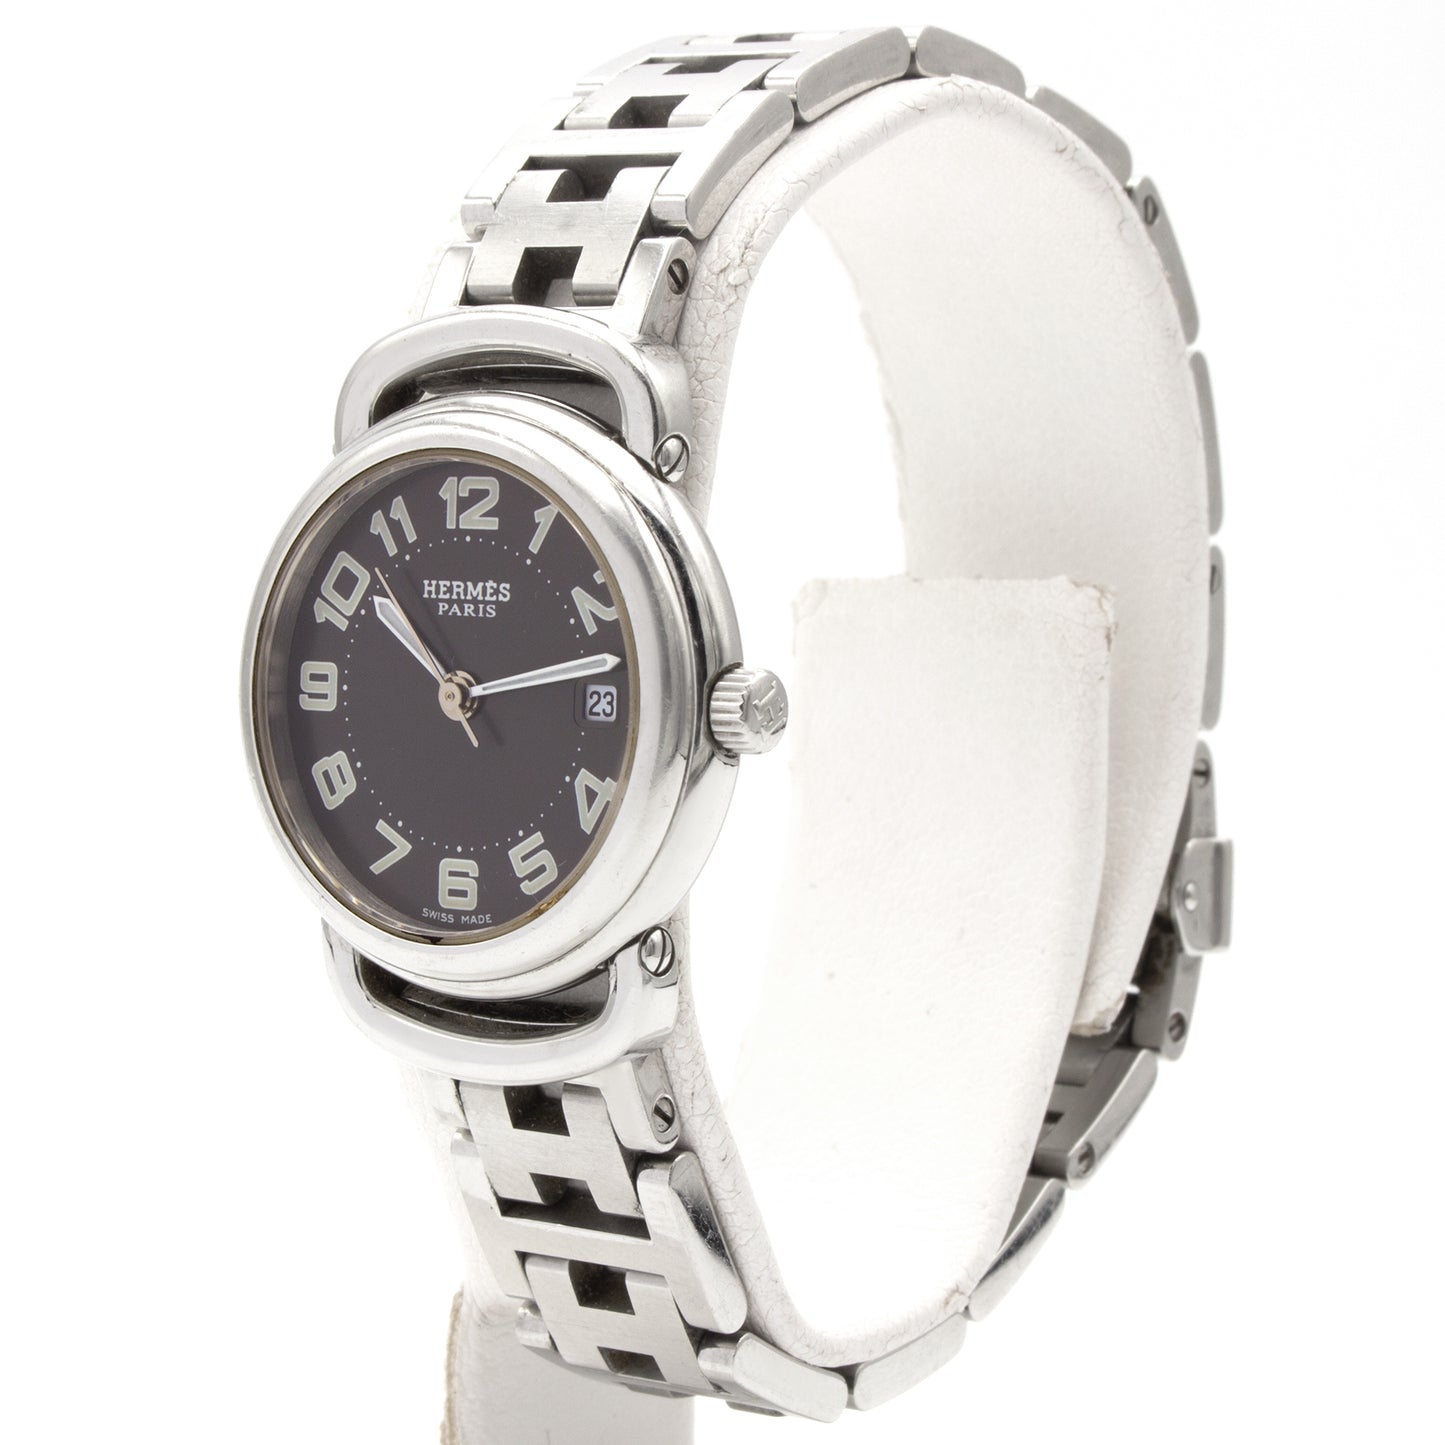 Hermès Pullman PU2.210 watch